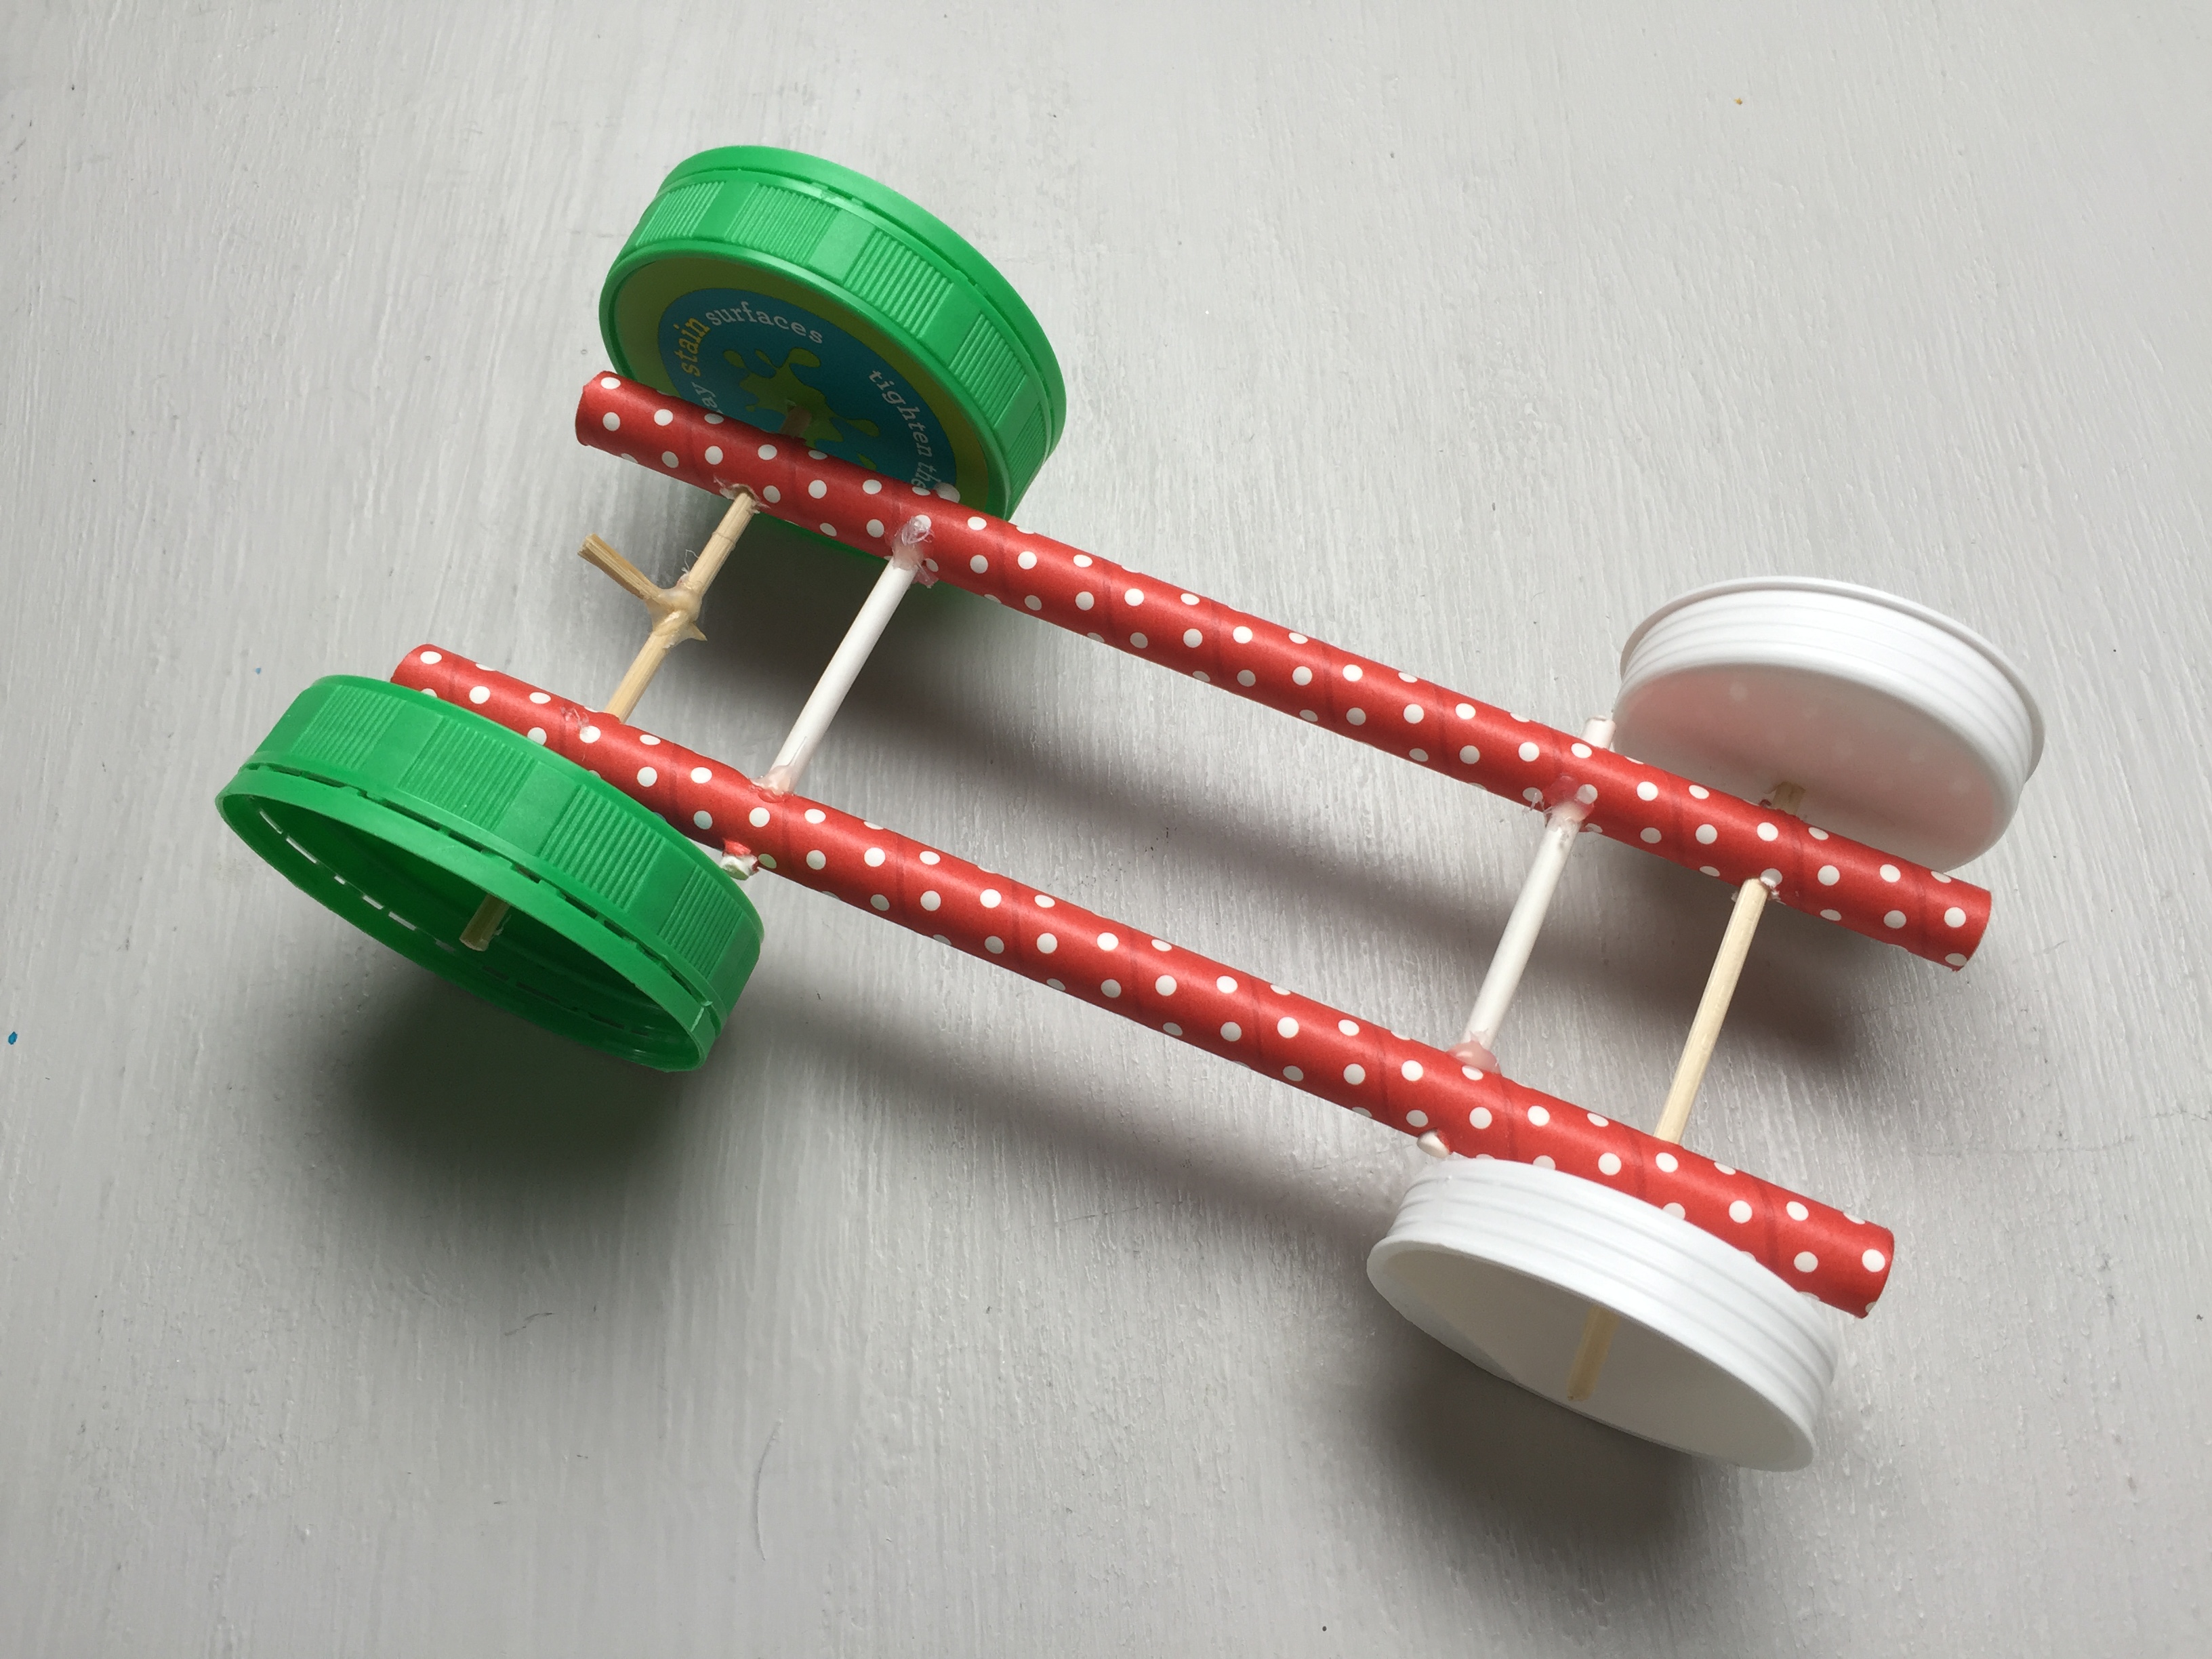 Make a Rubber Band-Powered Car